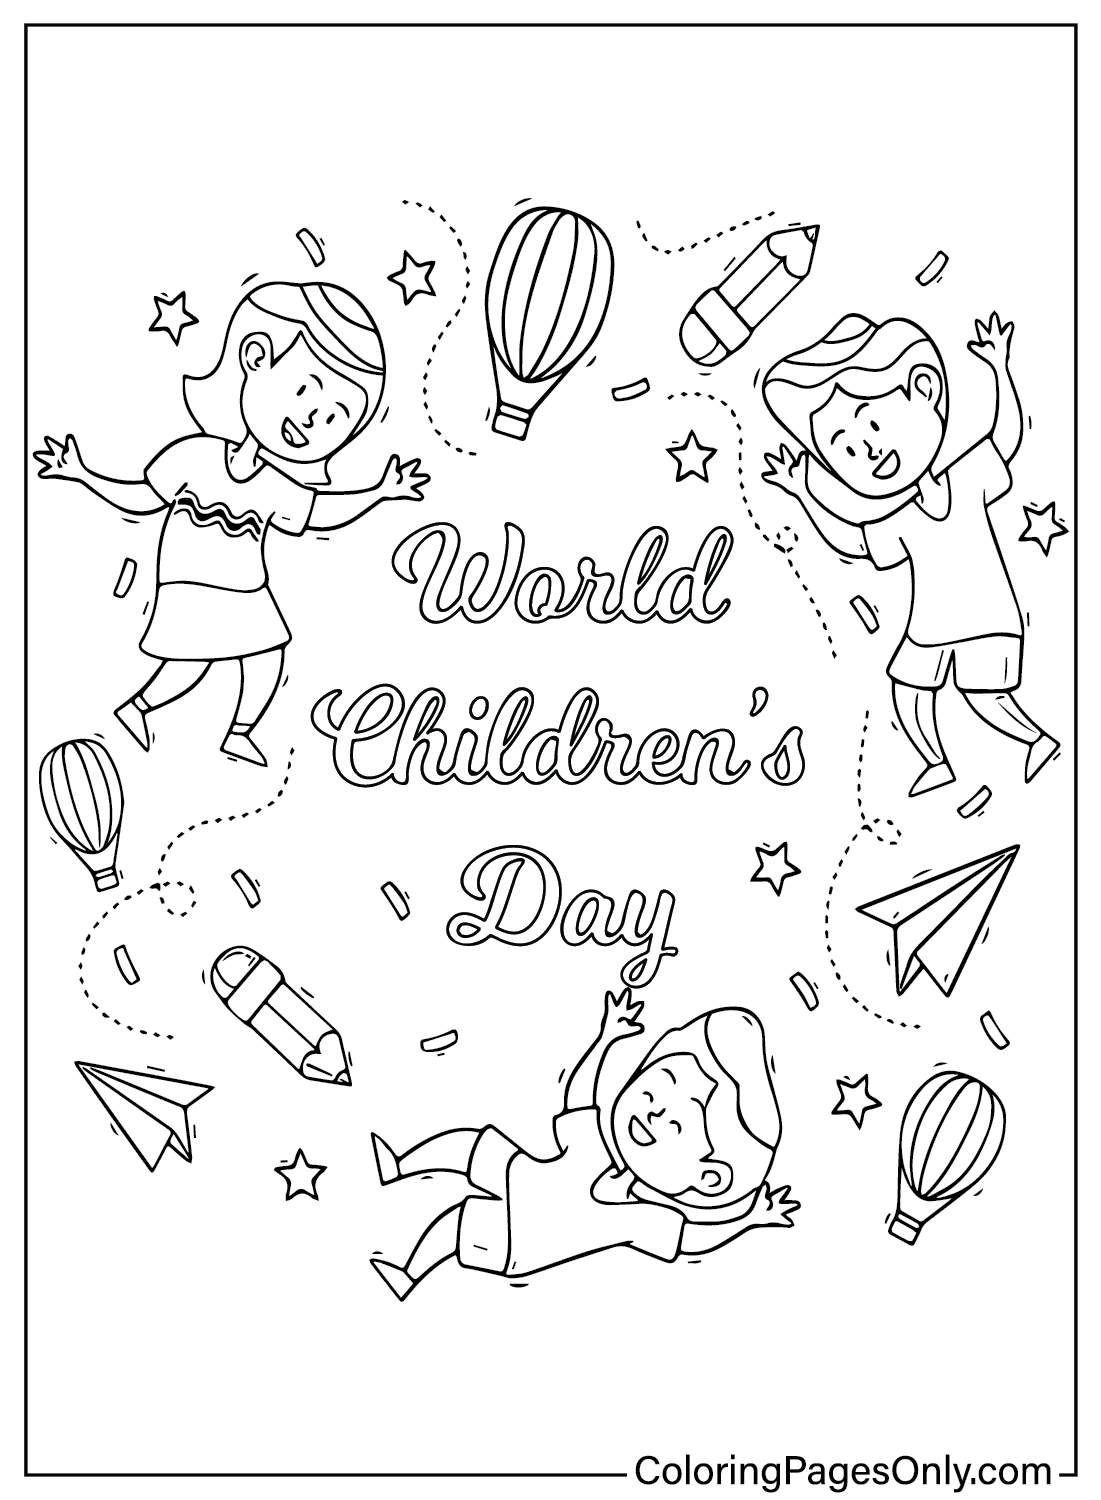 Wereld Kinderdag kleurenpagina van Kinderdag